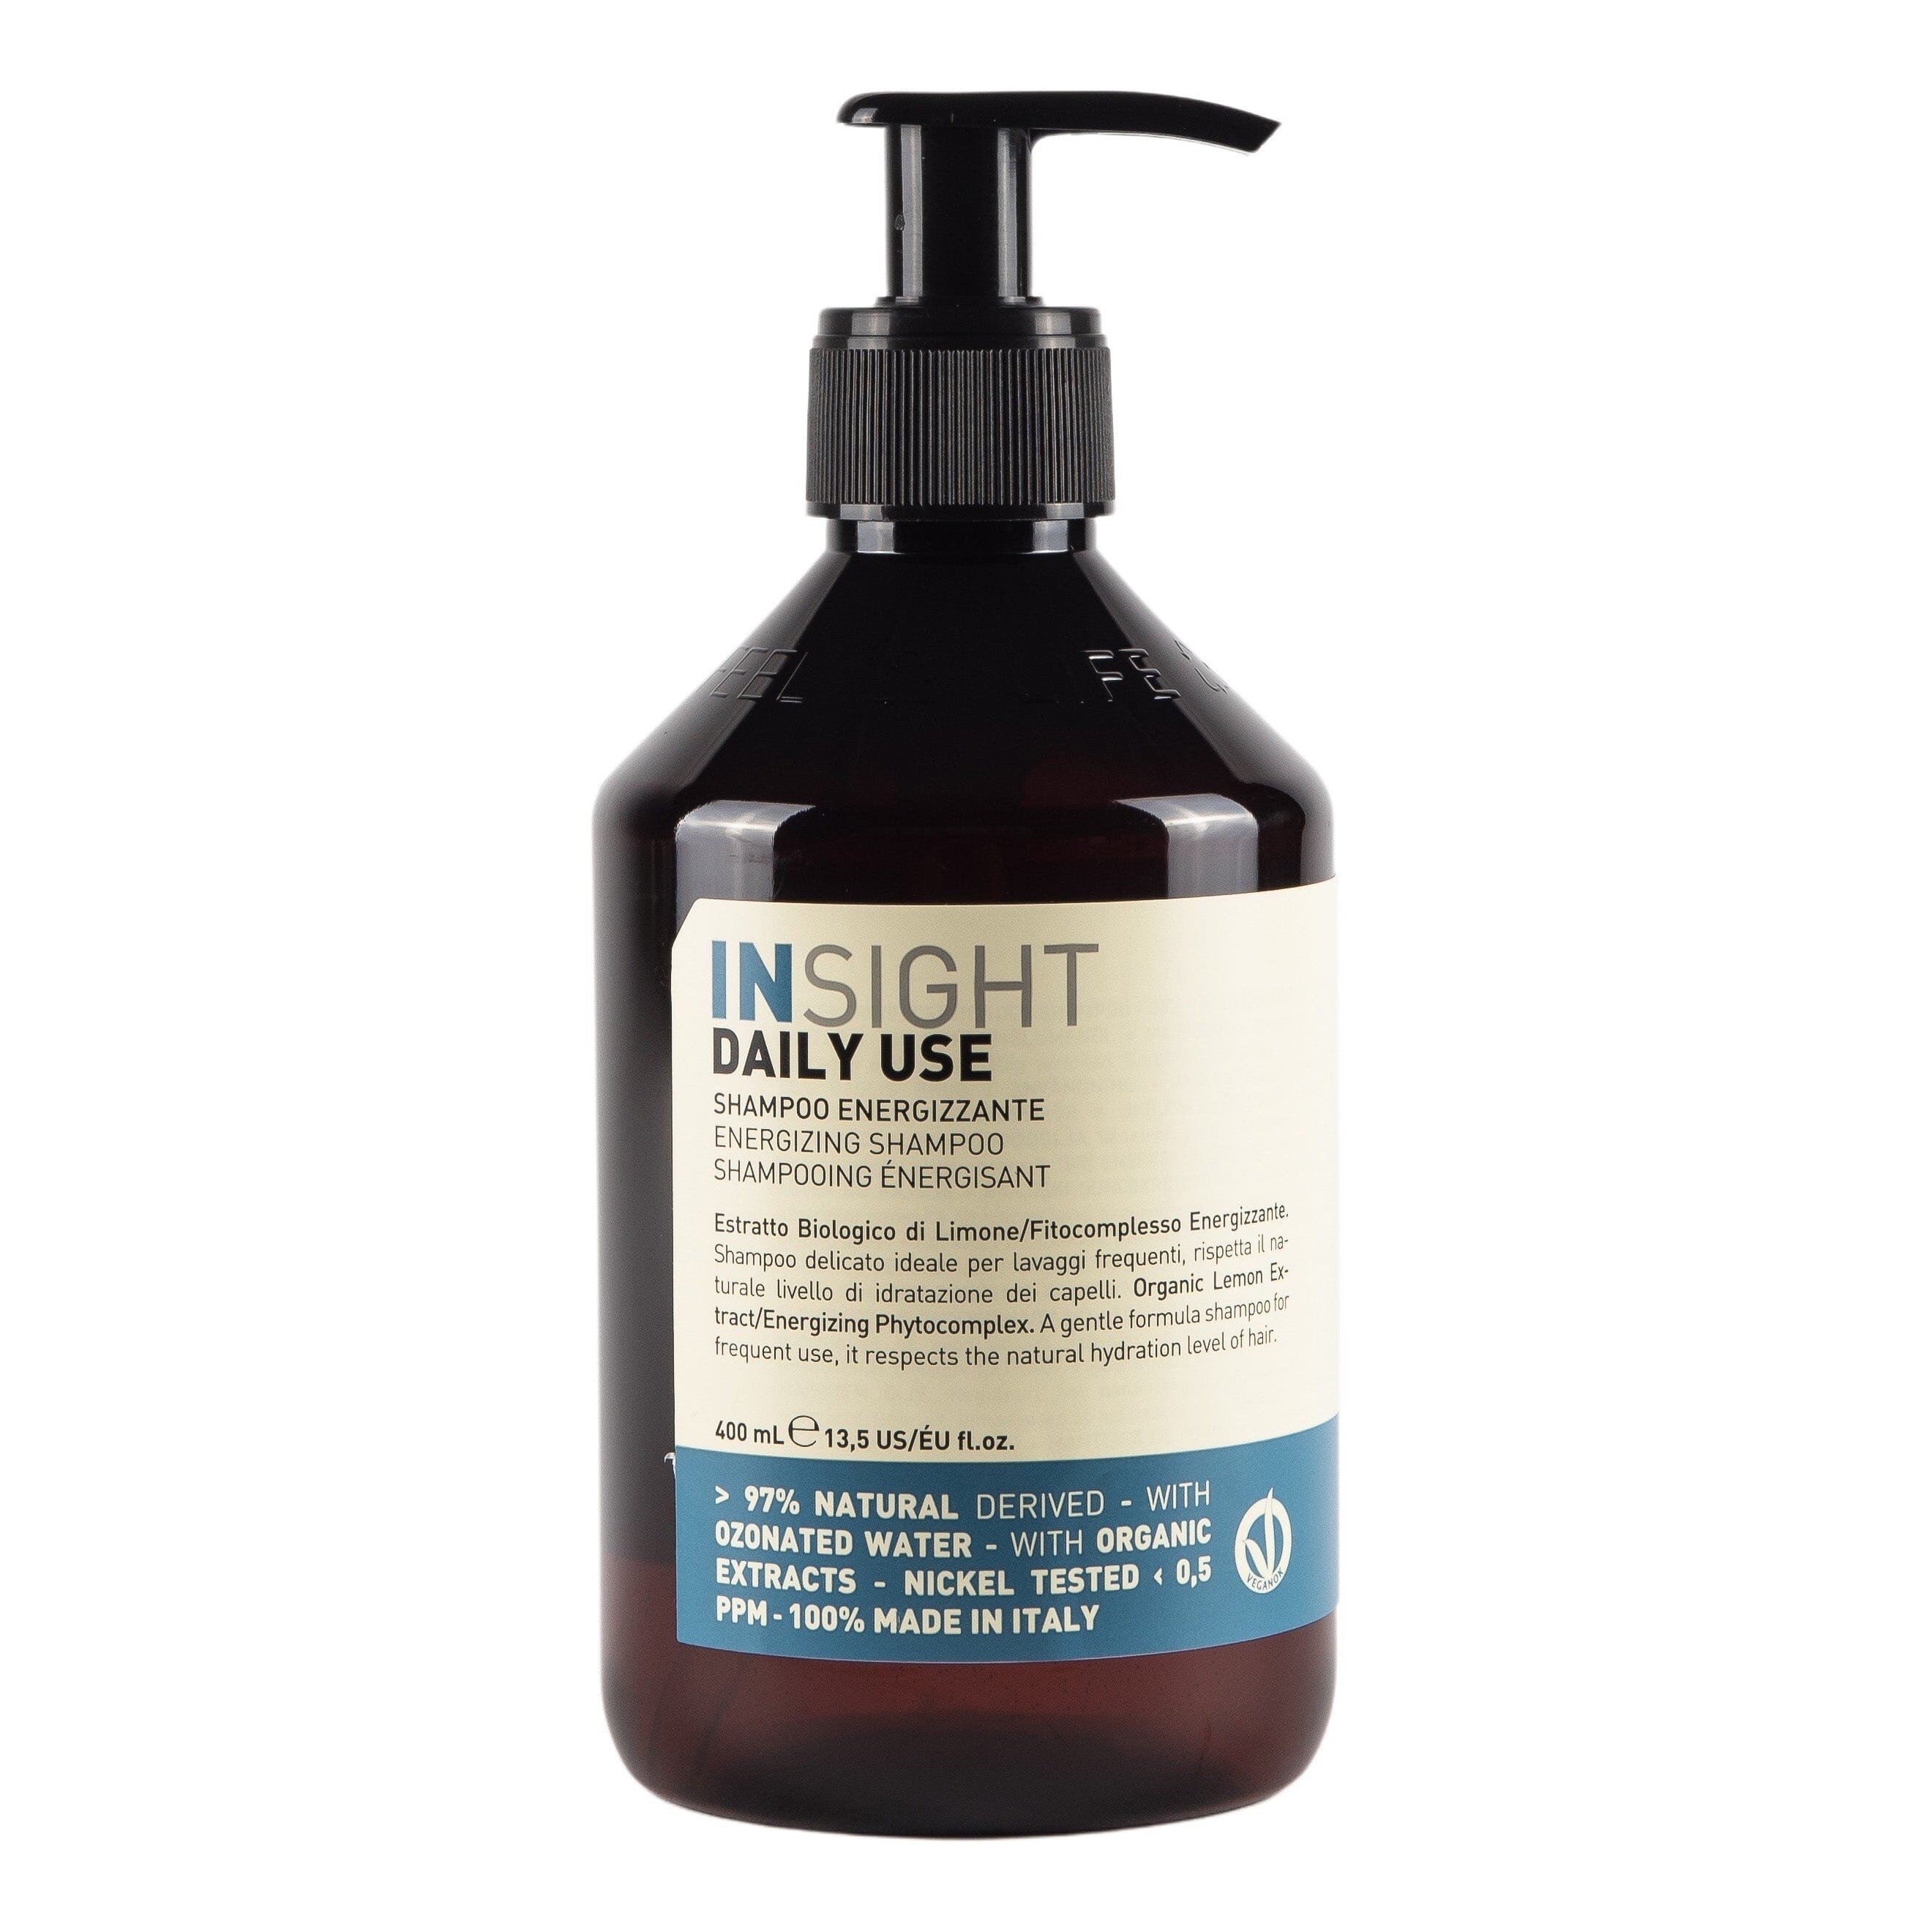 Insight Daily Use - Energizing sjampo 400 ml